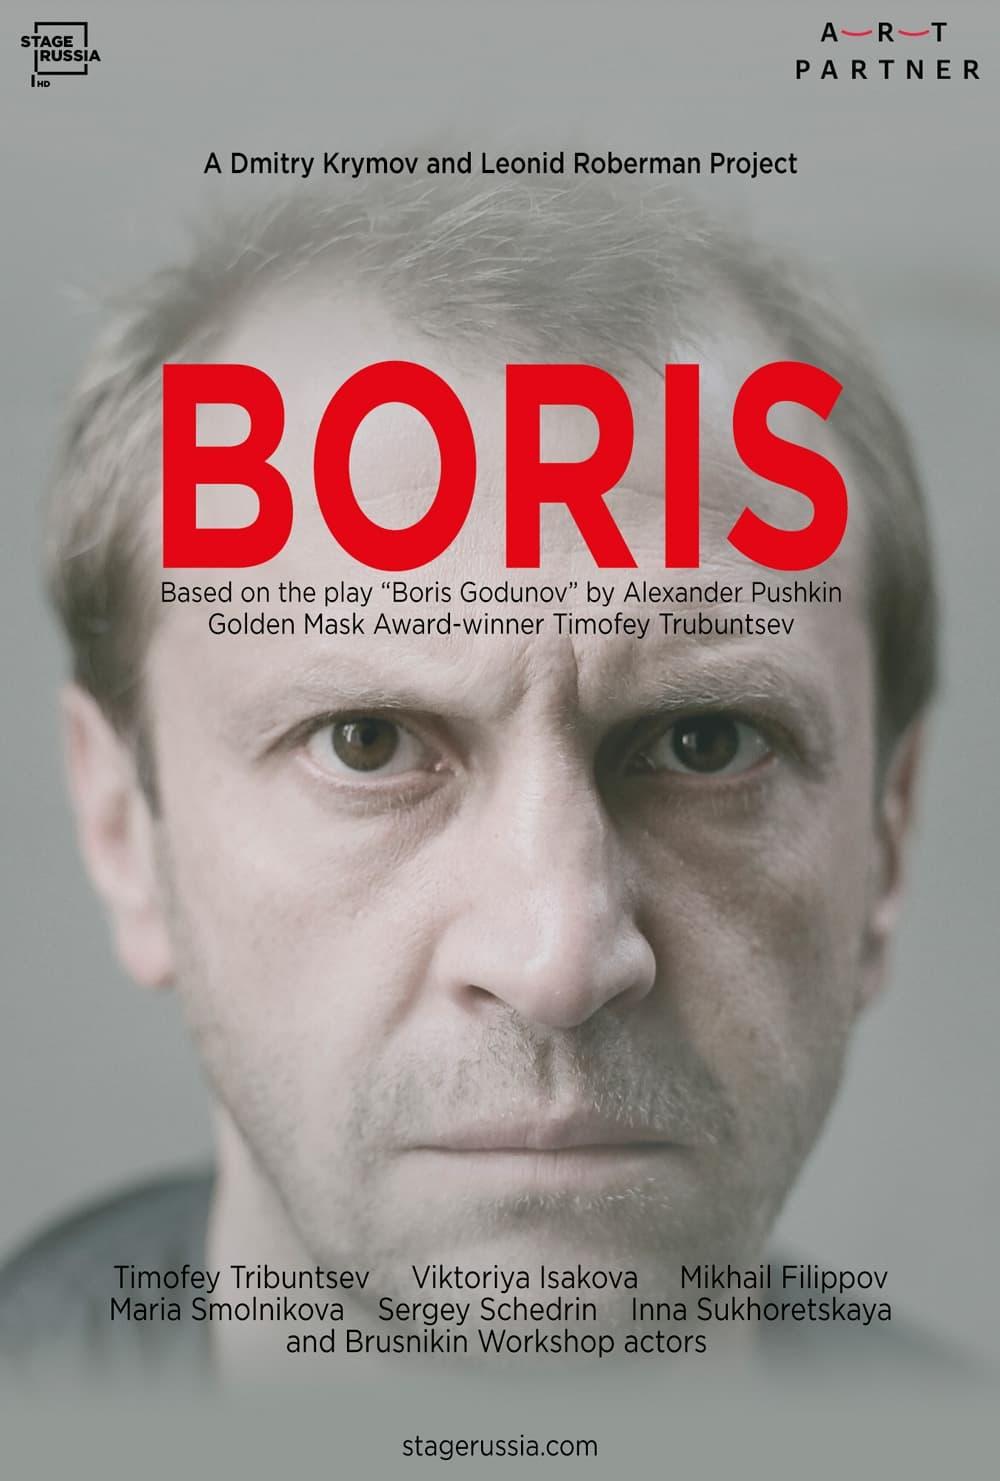 Boris poster